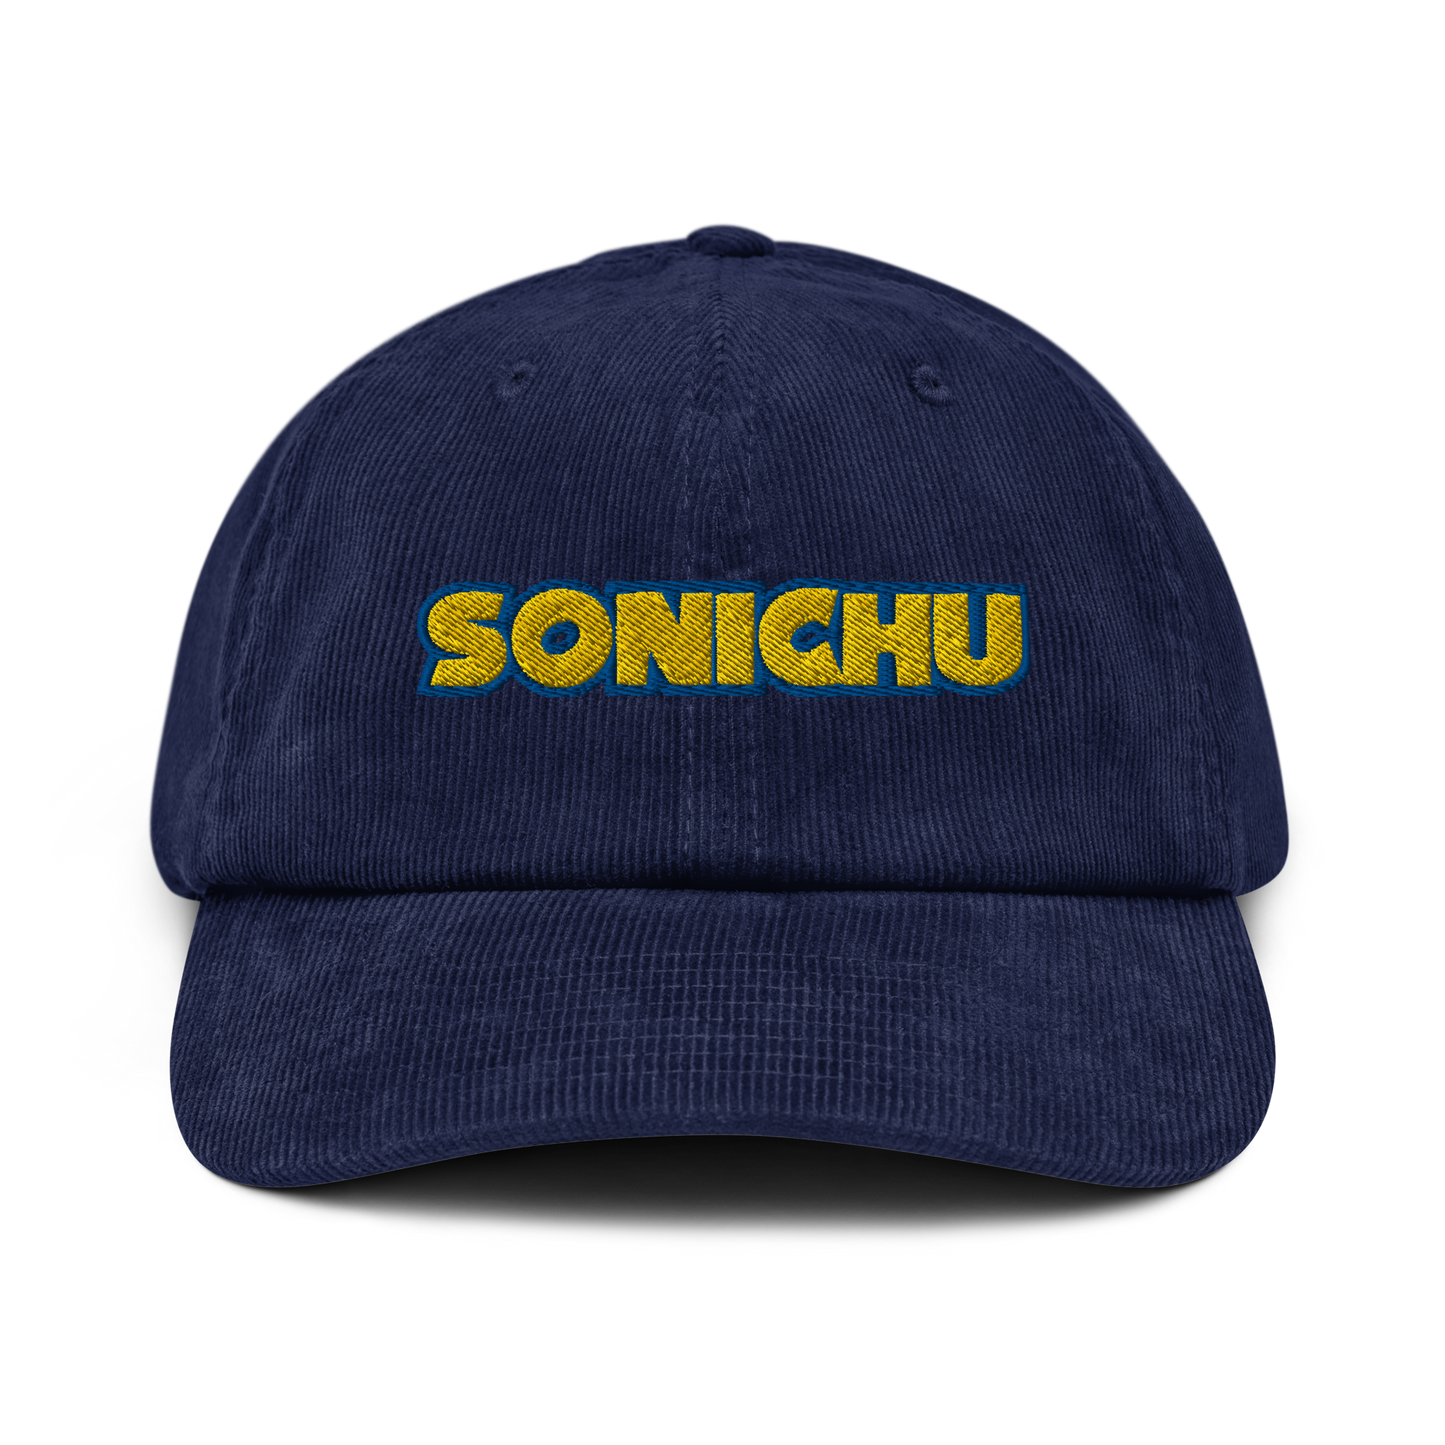 sonichu hat